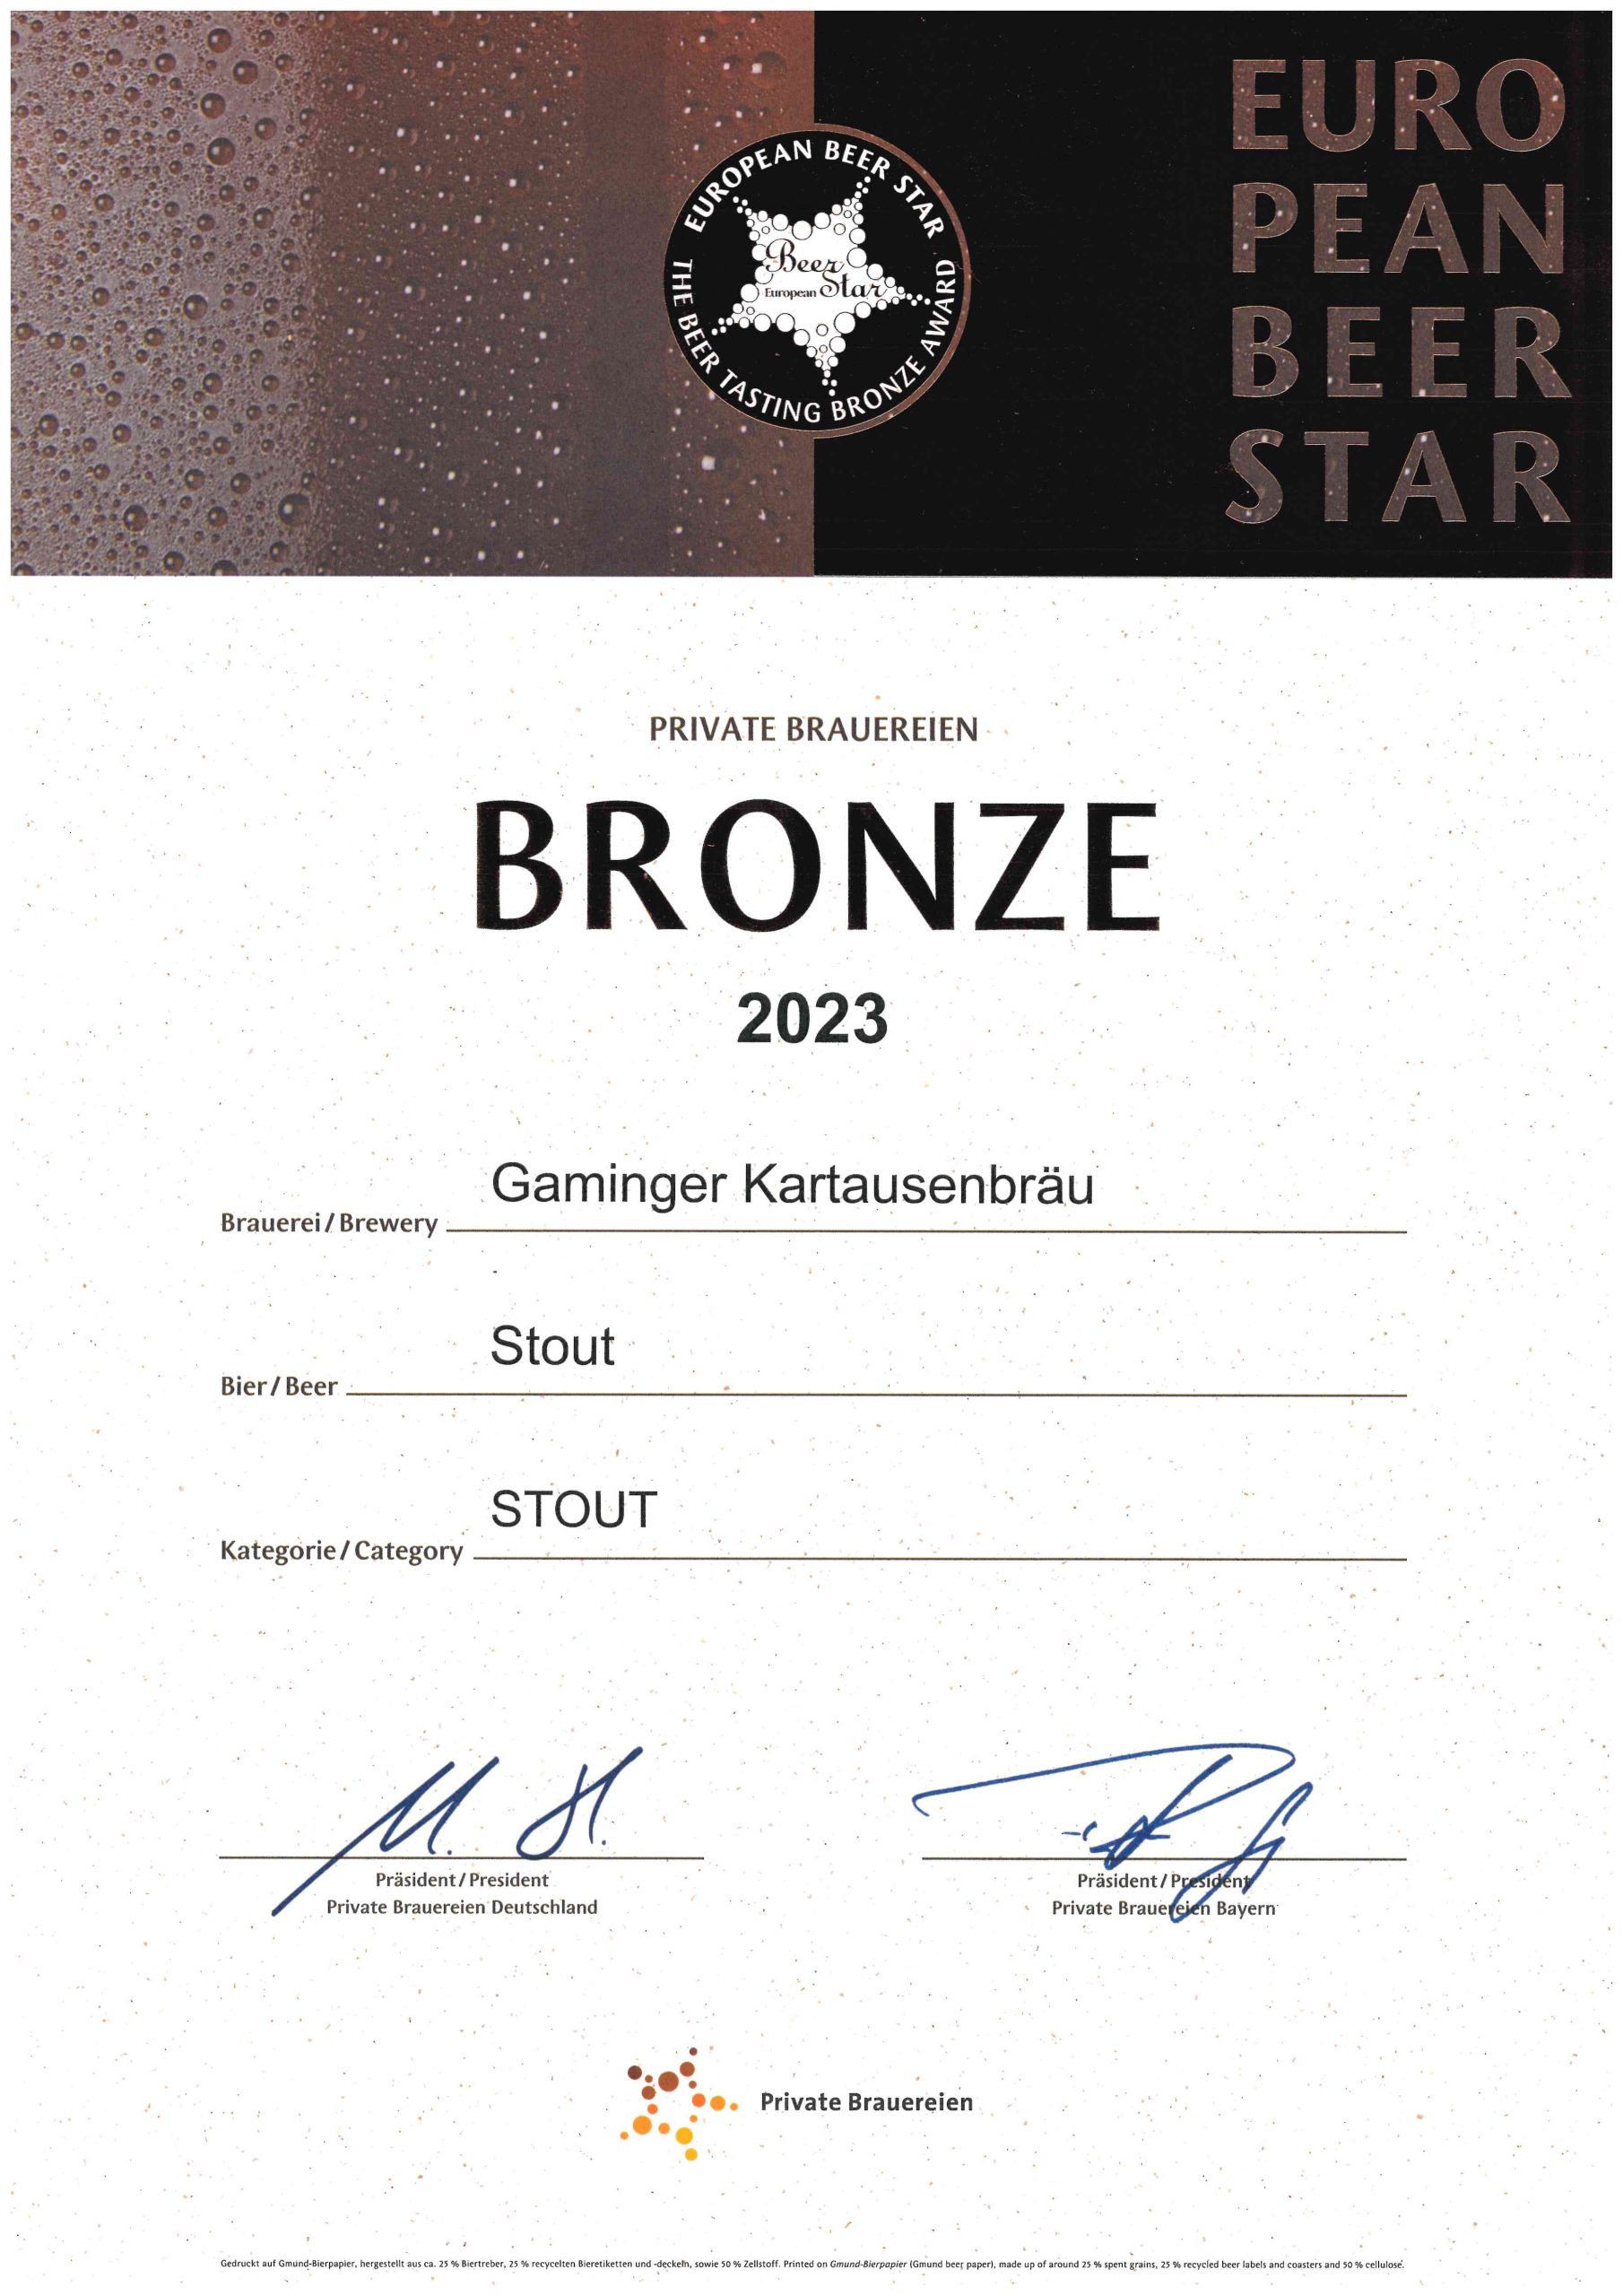 European Star Bronze